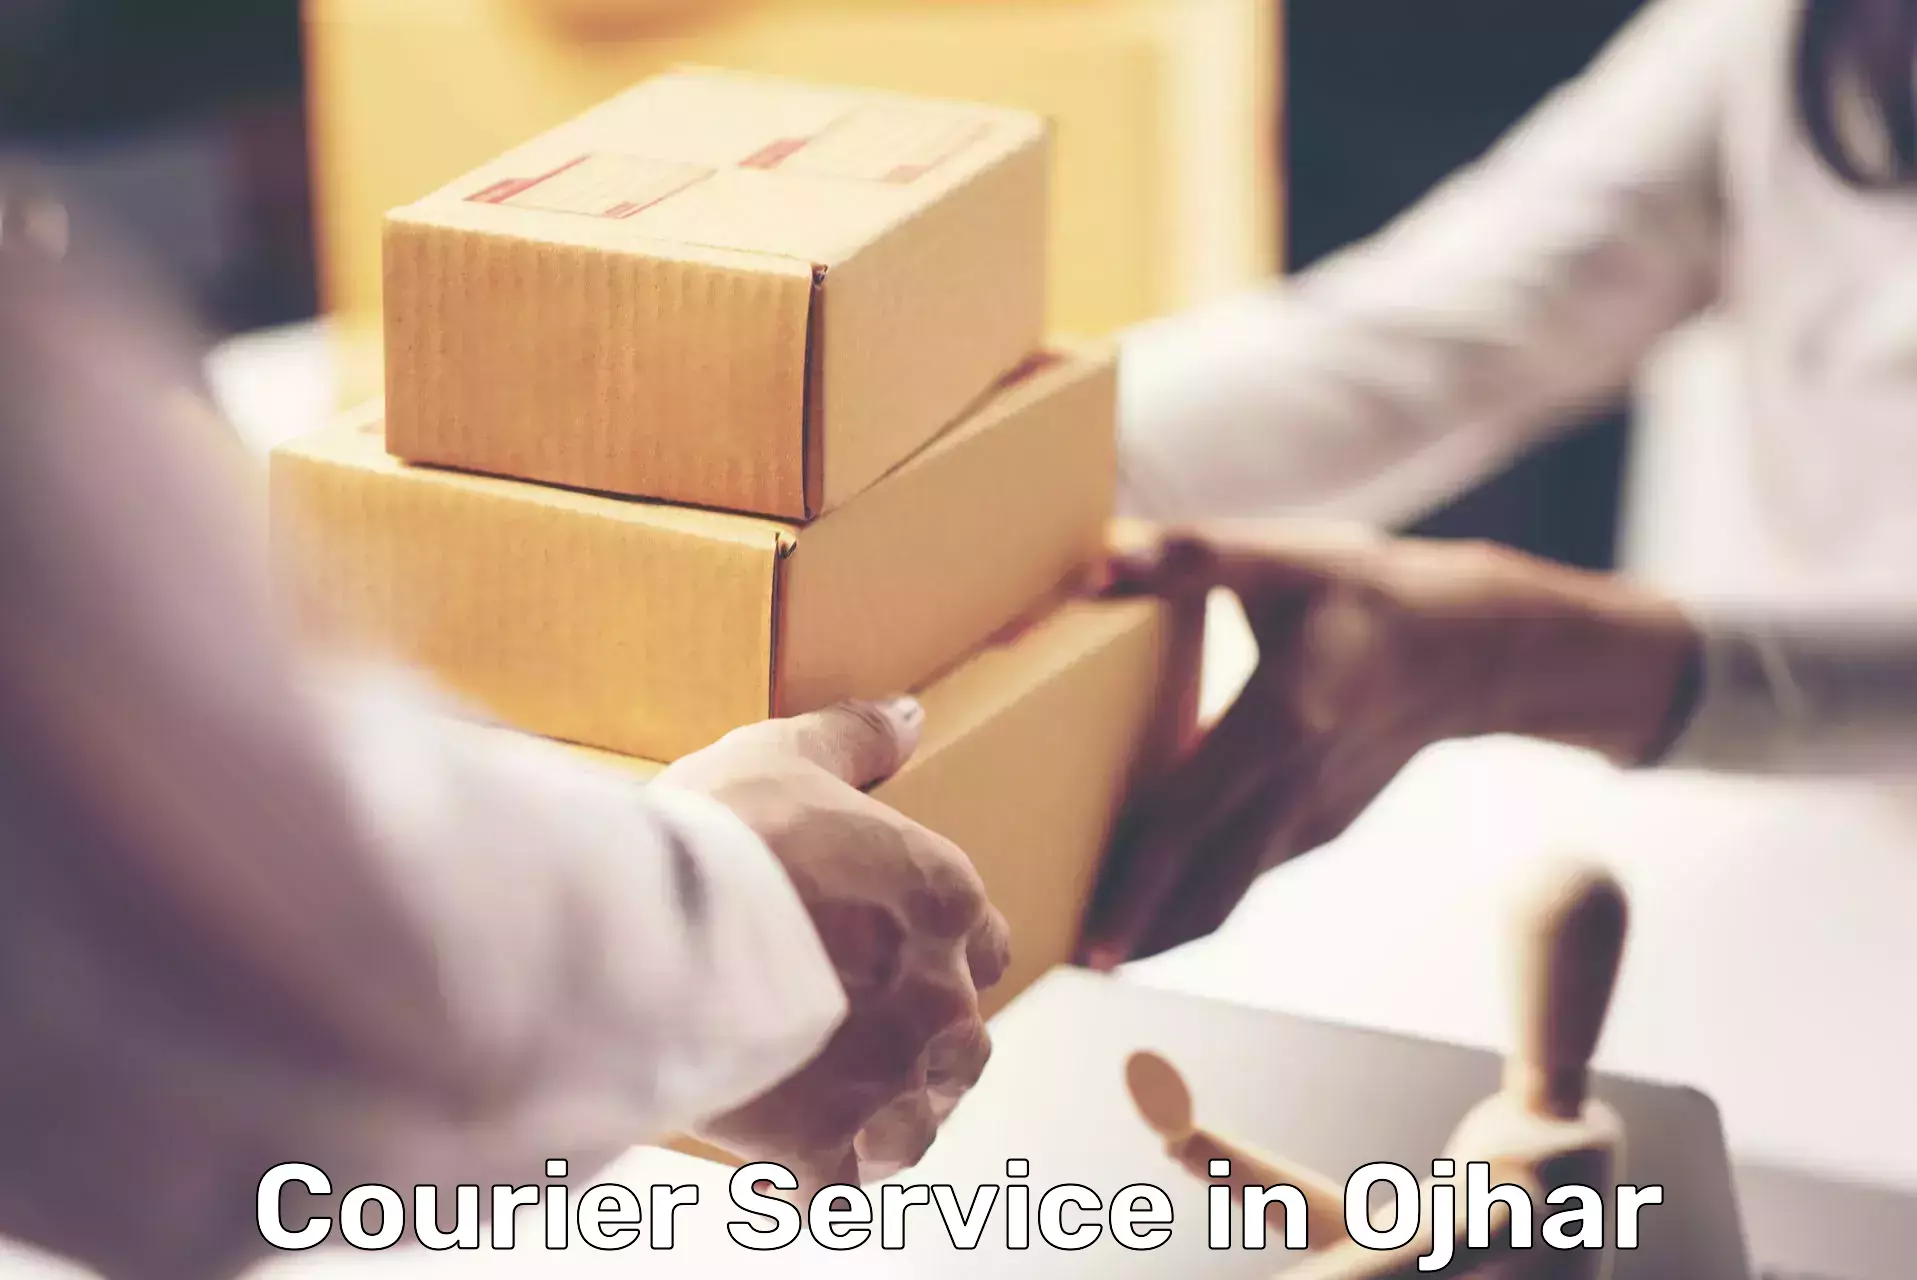 Advanced parcel tracking in Ojhar